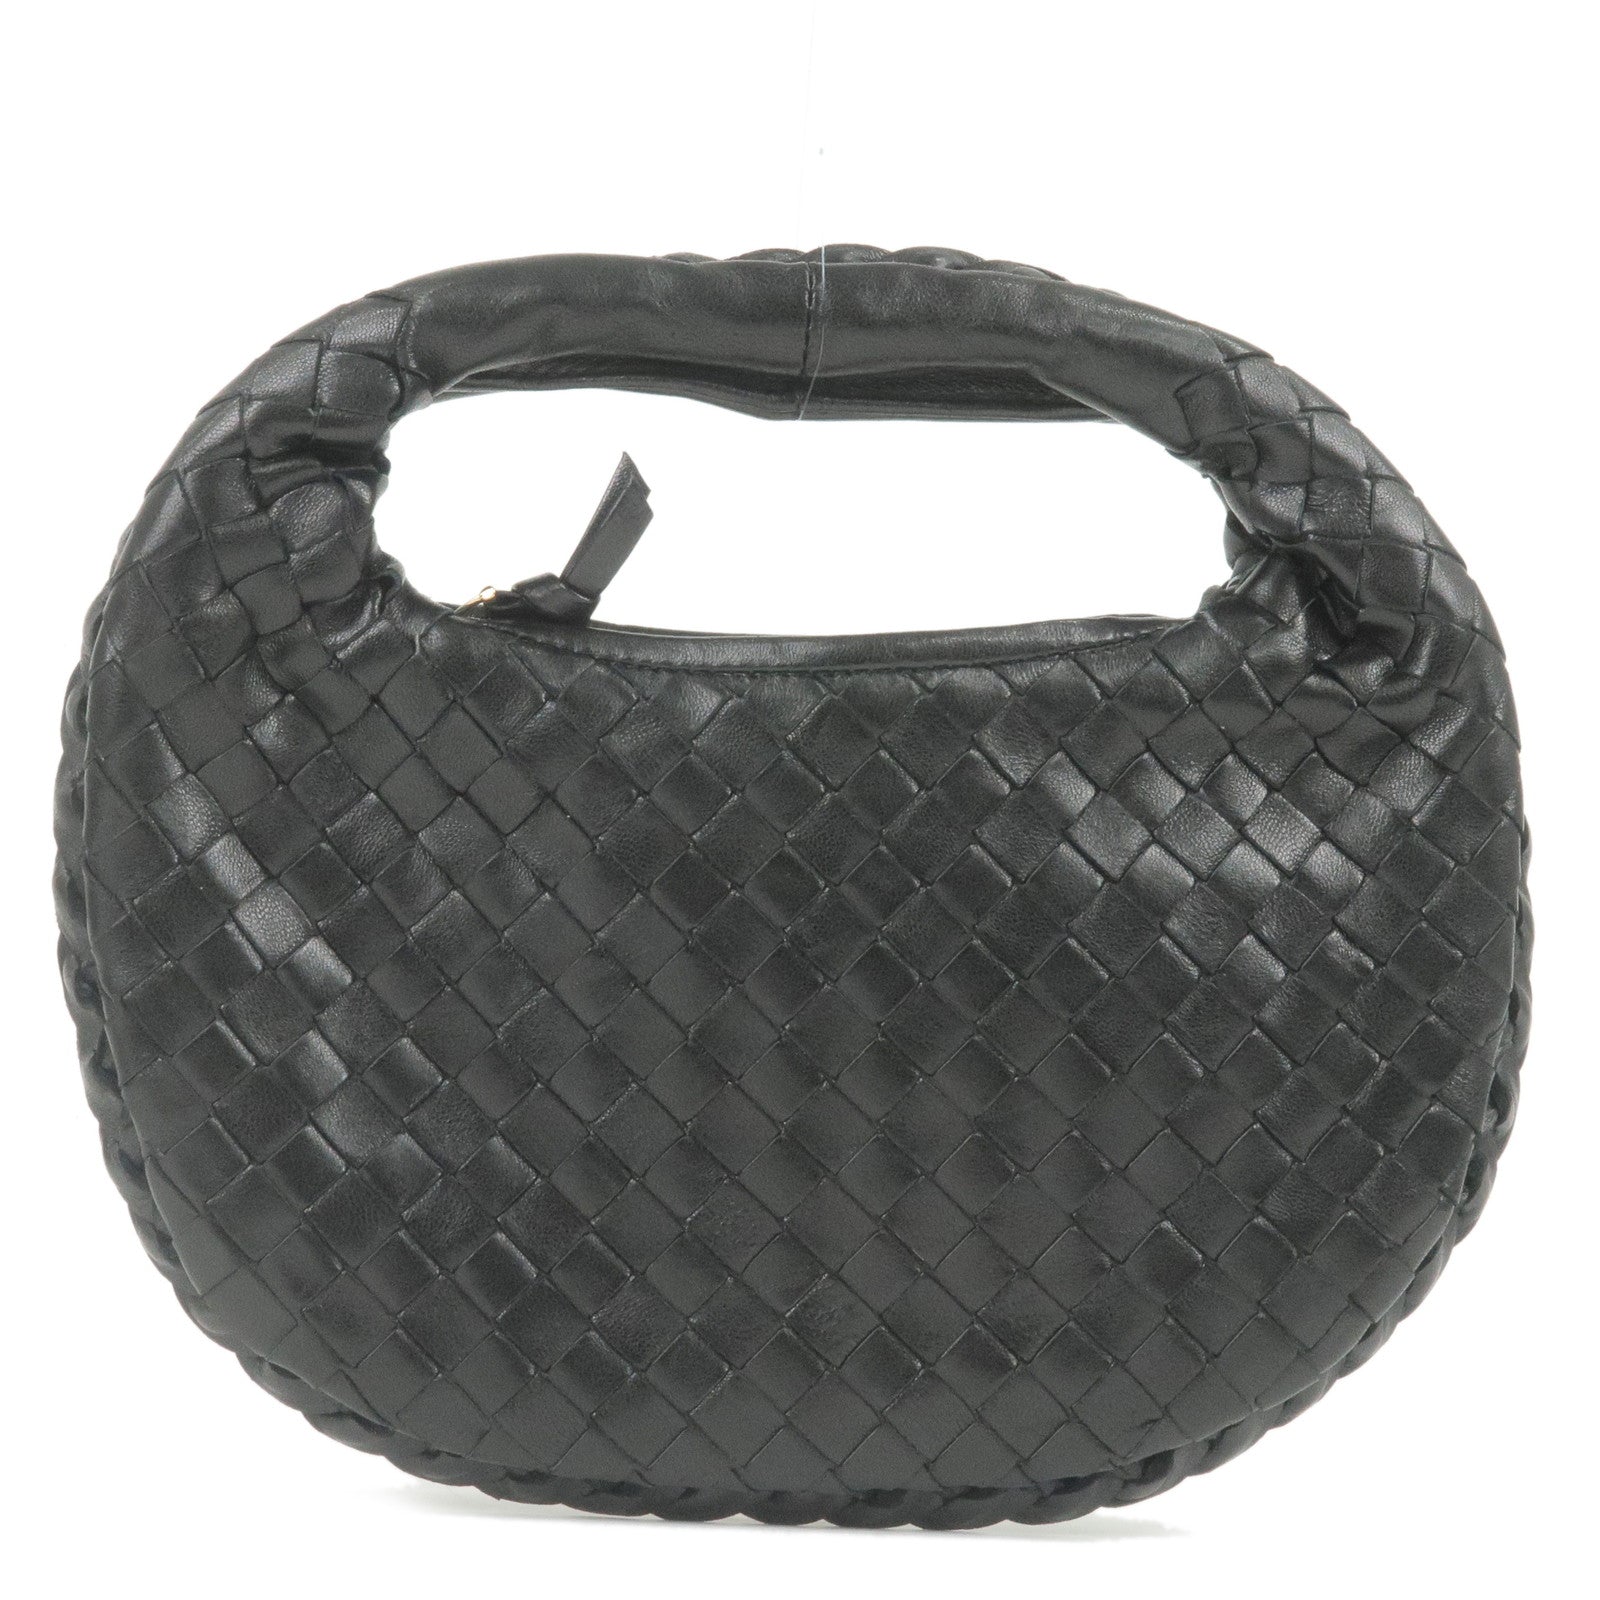 BOTTEGA VENETA Intrecciato leather shoulder bag